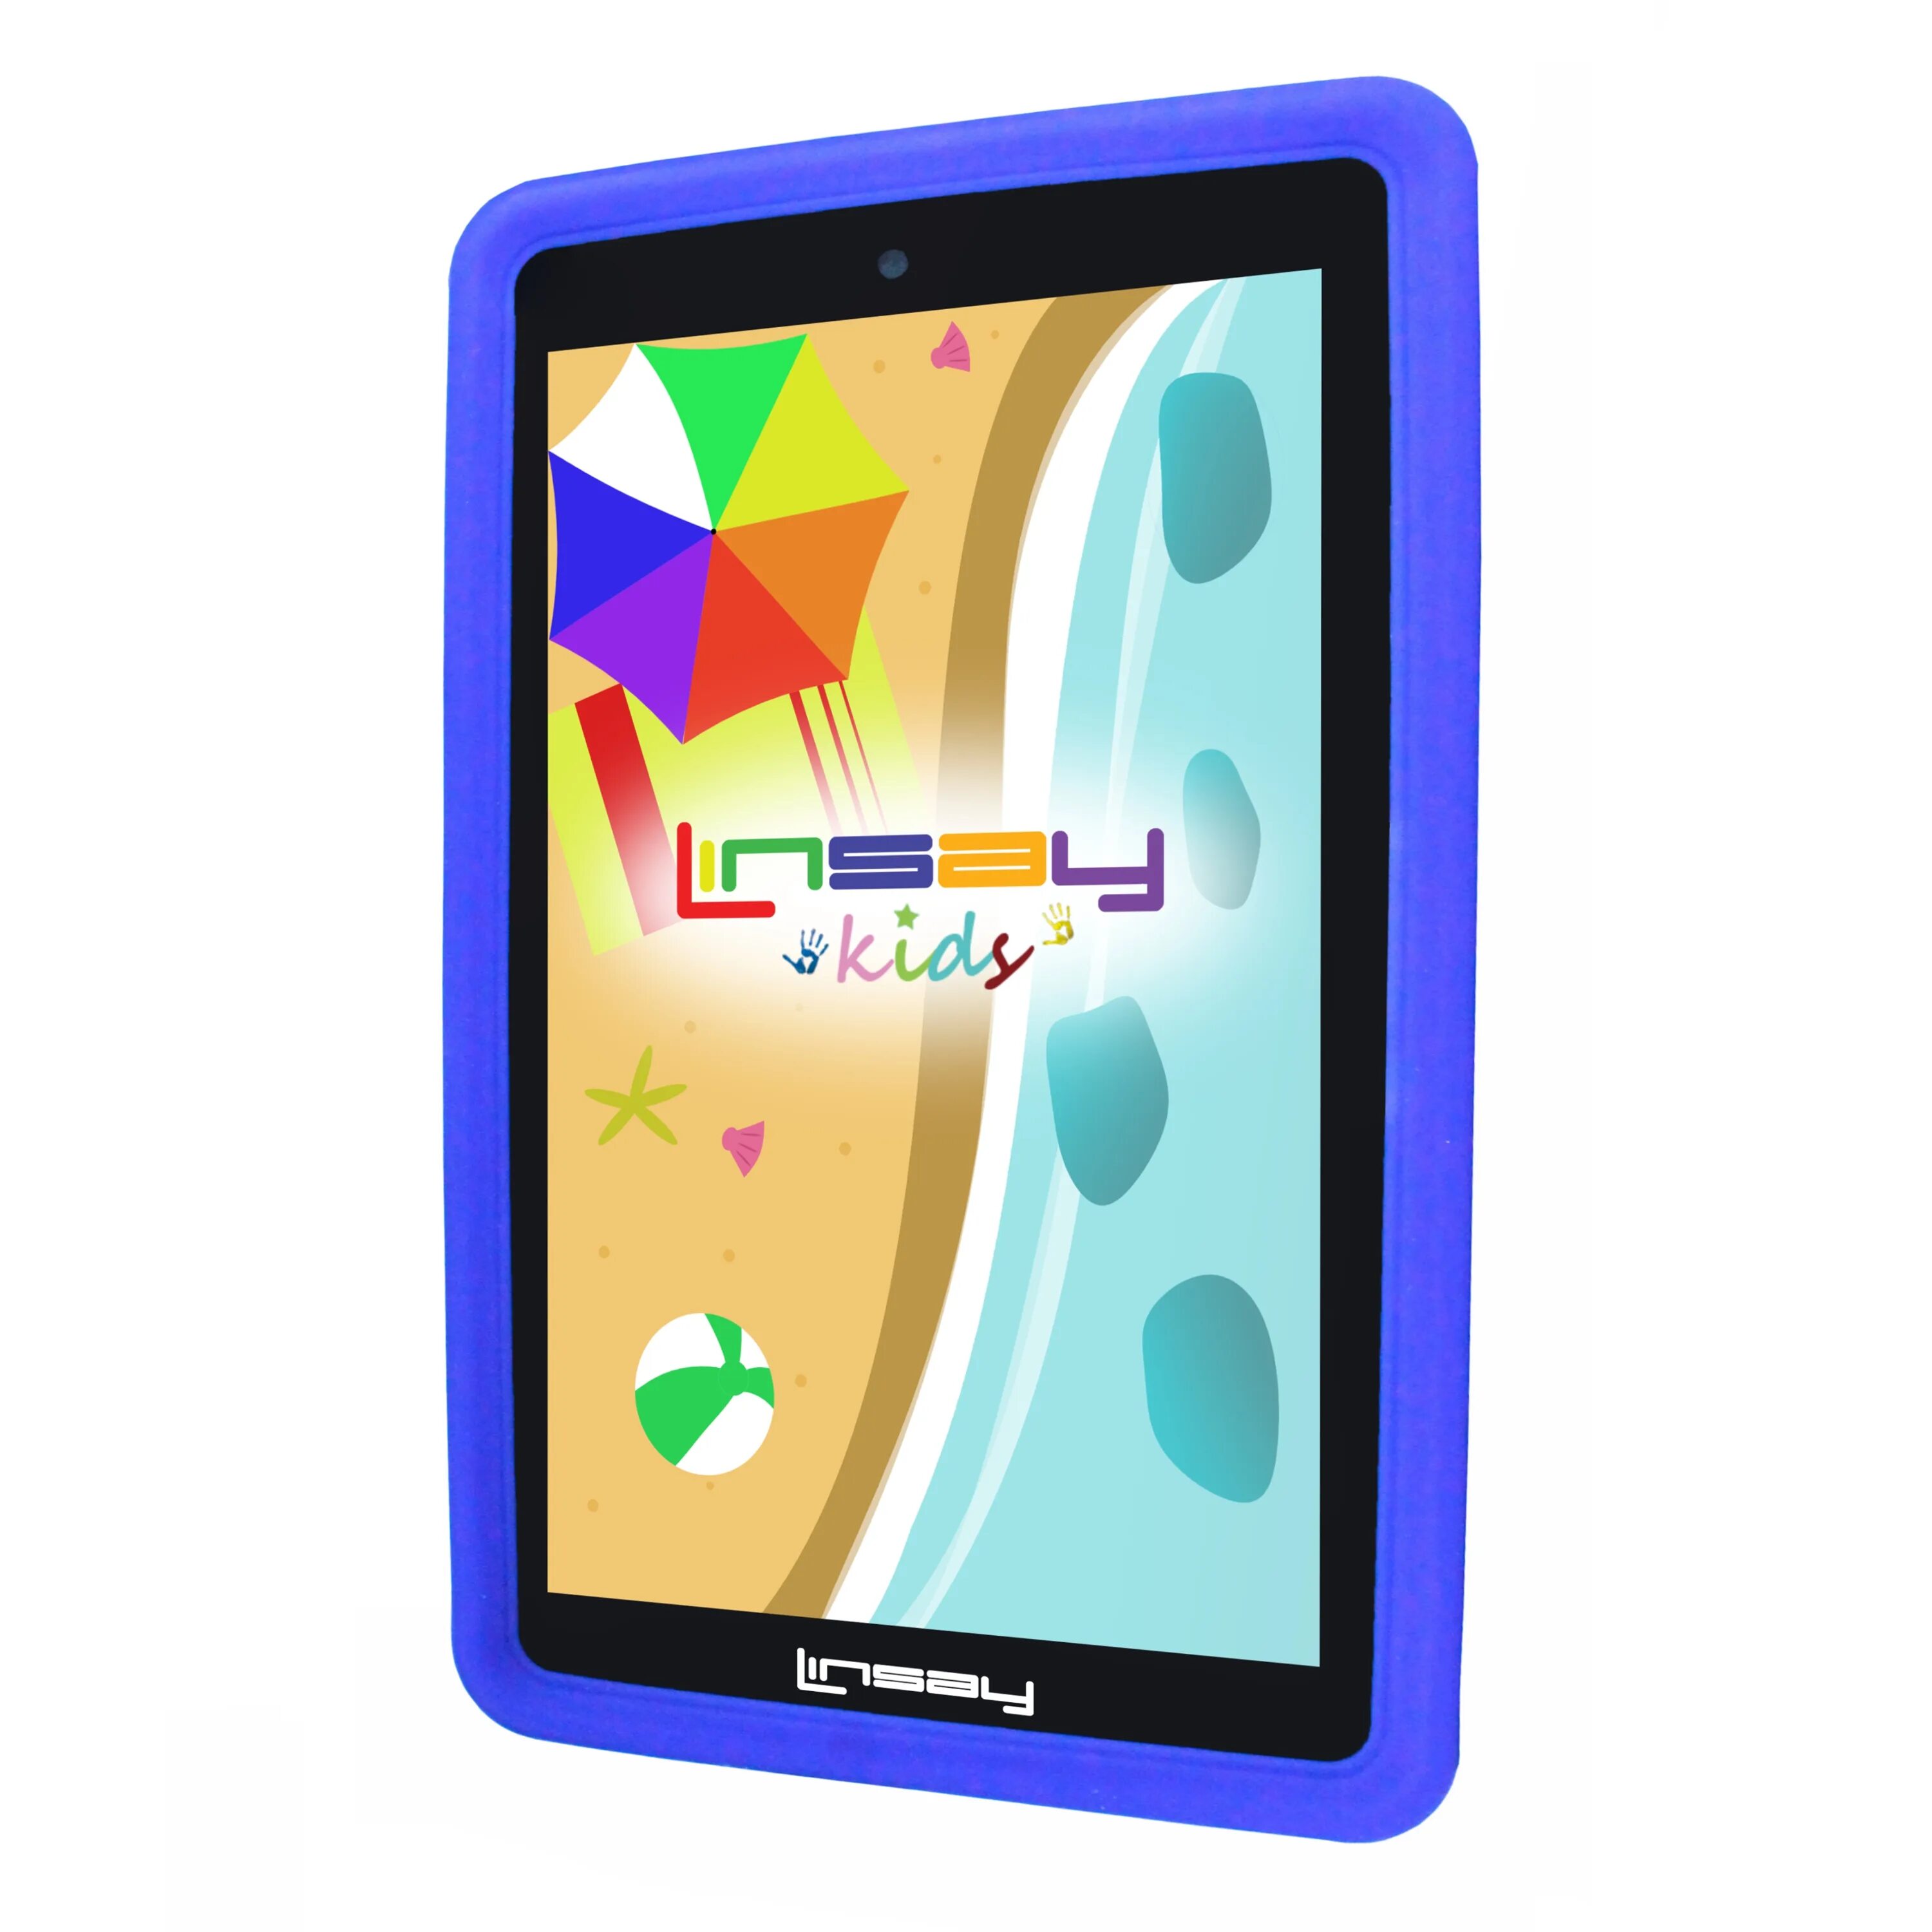 Tablet PC Tab x10 экран. Планшет i-Life Kids Tab 4. Планшет Kids голубой. Smart Tab планшет детский. Планшет андроид ребенку